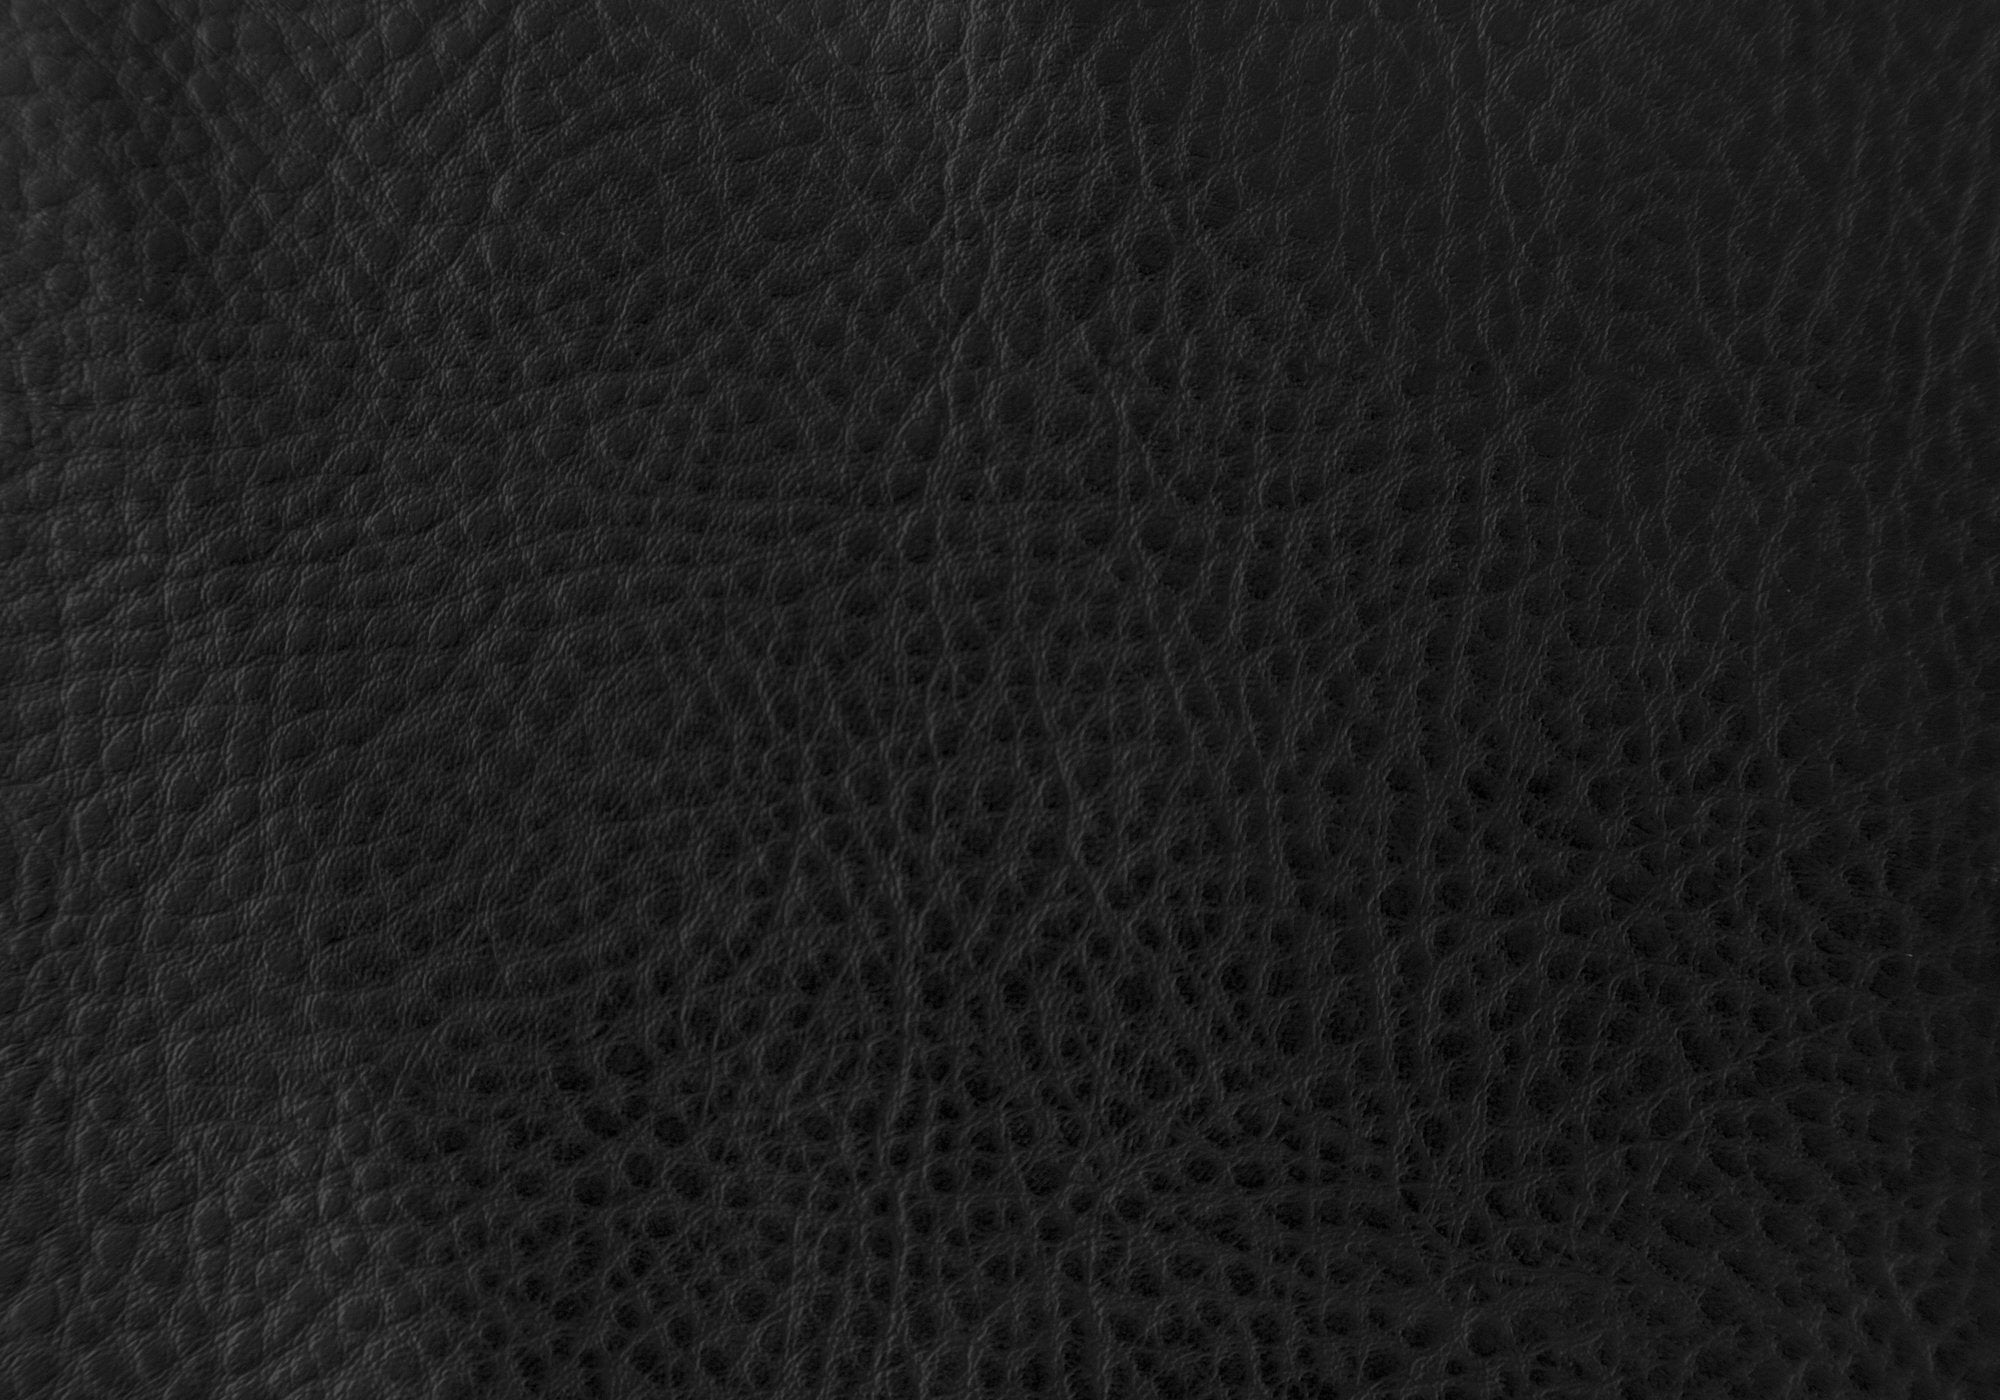 47" x 37" x 63" Black Foam Metal Polyurethane Leather Look Dining Chairs 2pcs